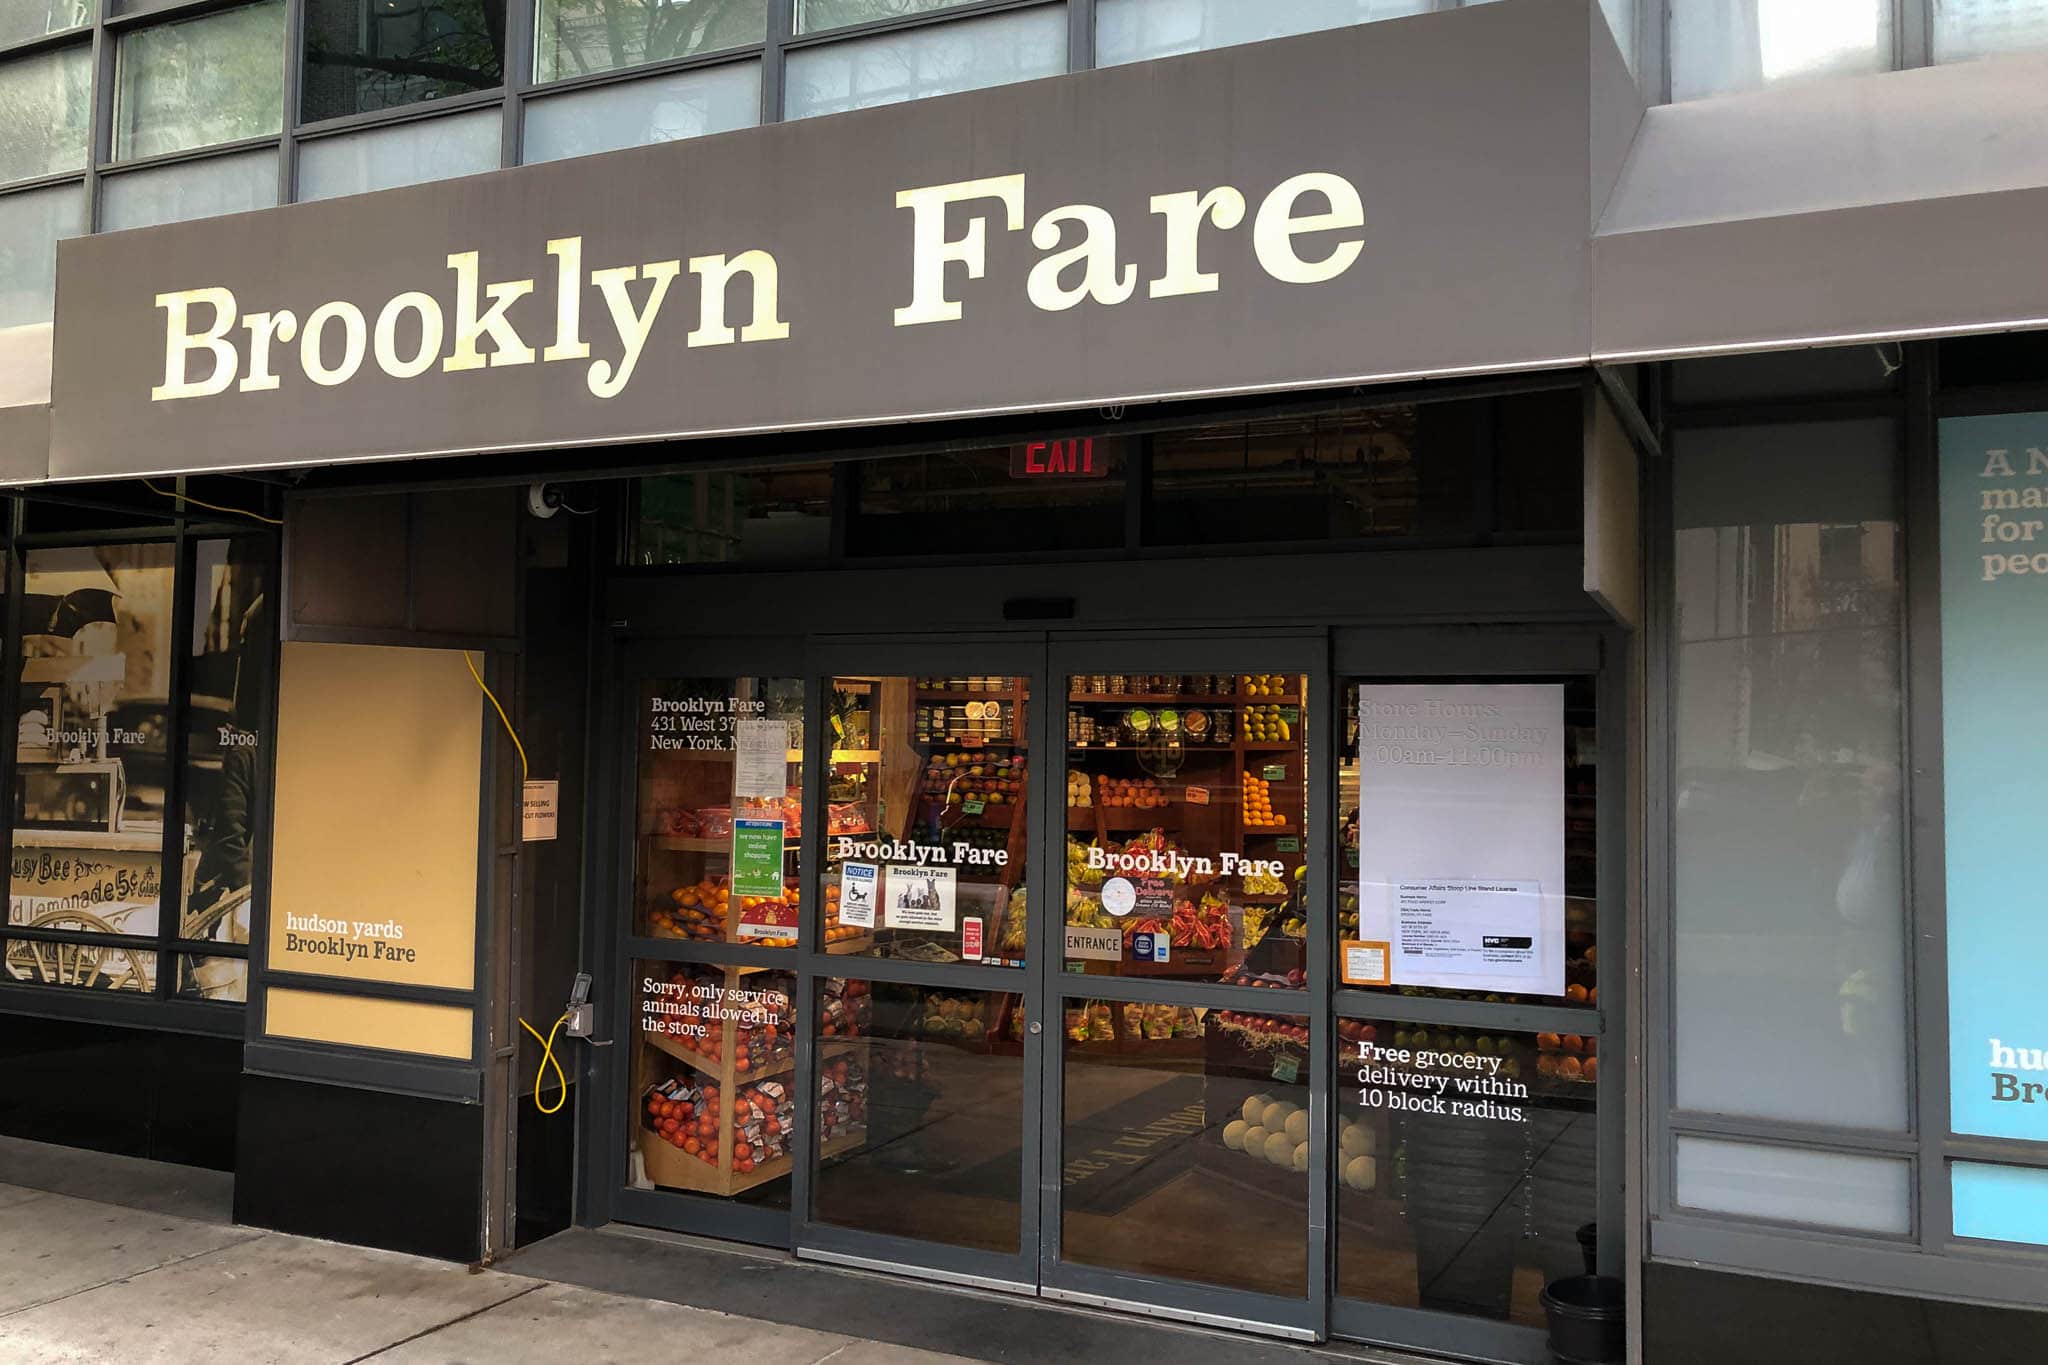 MySlowTrip - New York Chef's Table Brooklyn Fare entrance